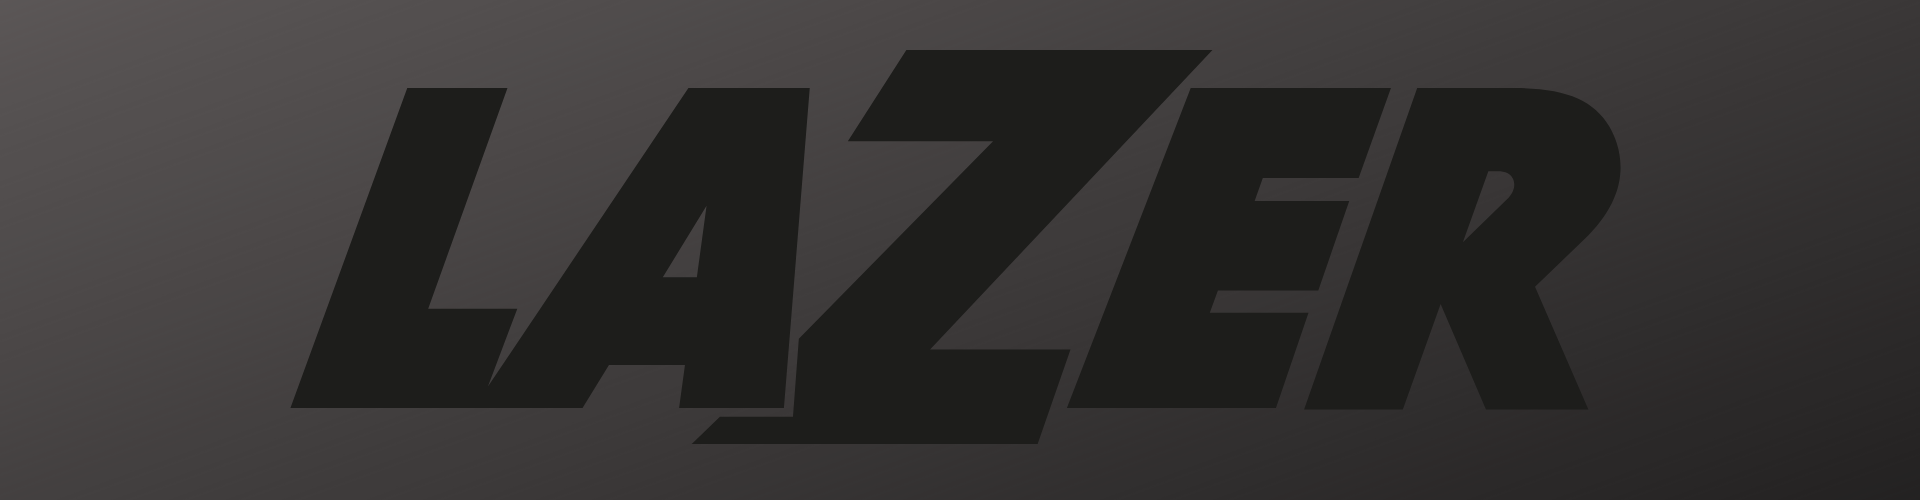 Lazer Brand Category